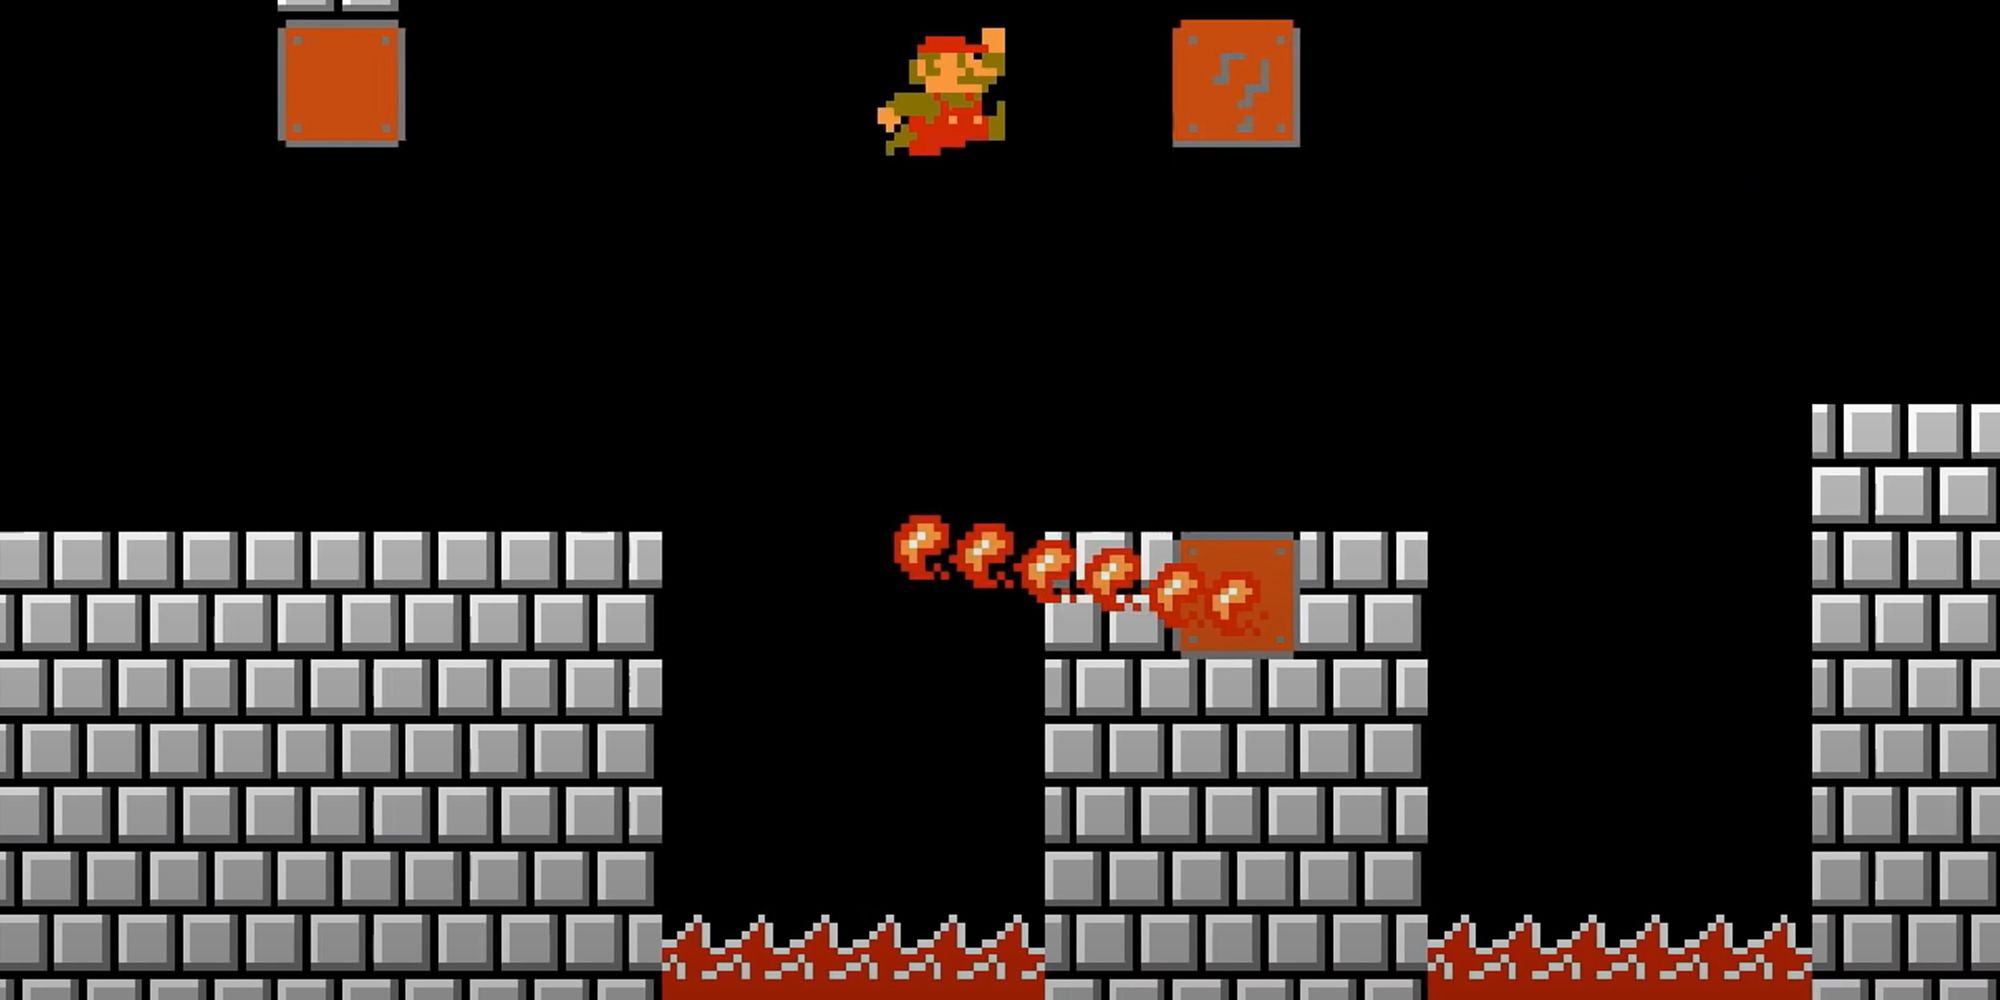 8 Most Frustrating Ways To Die In Mario Games